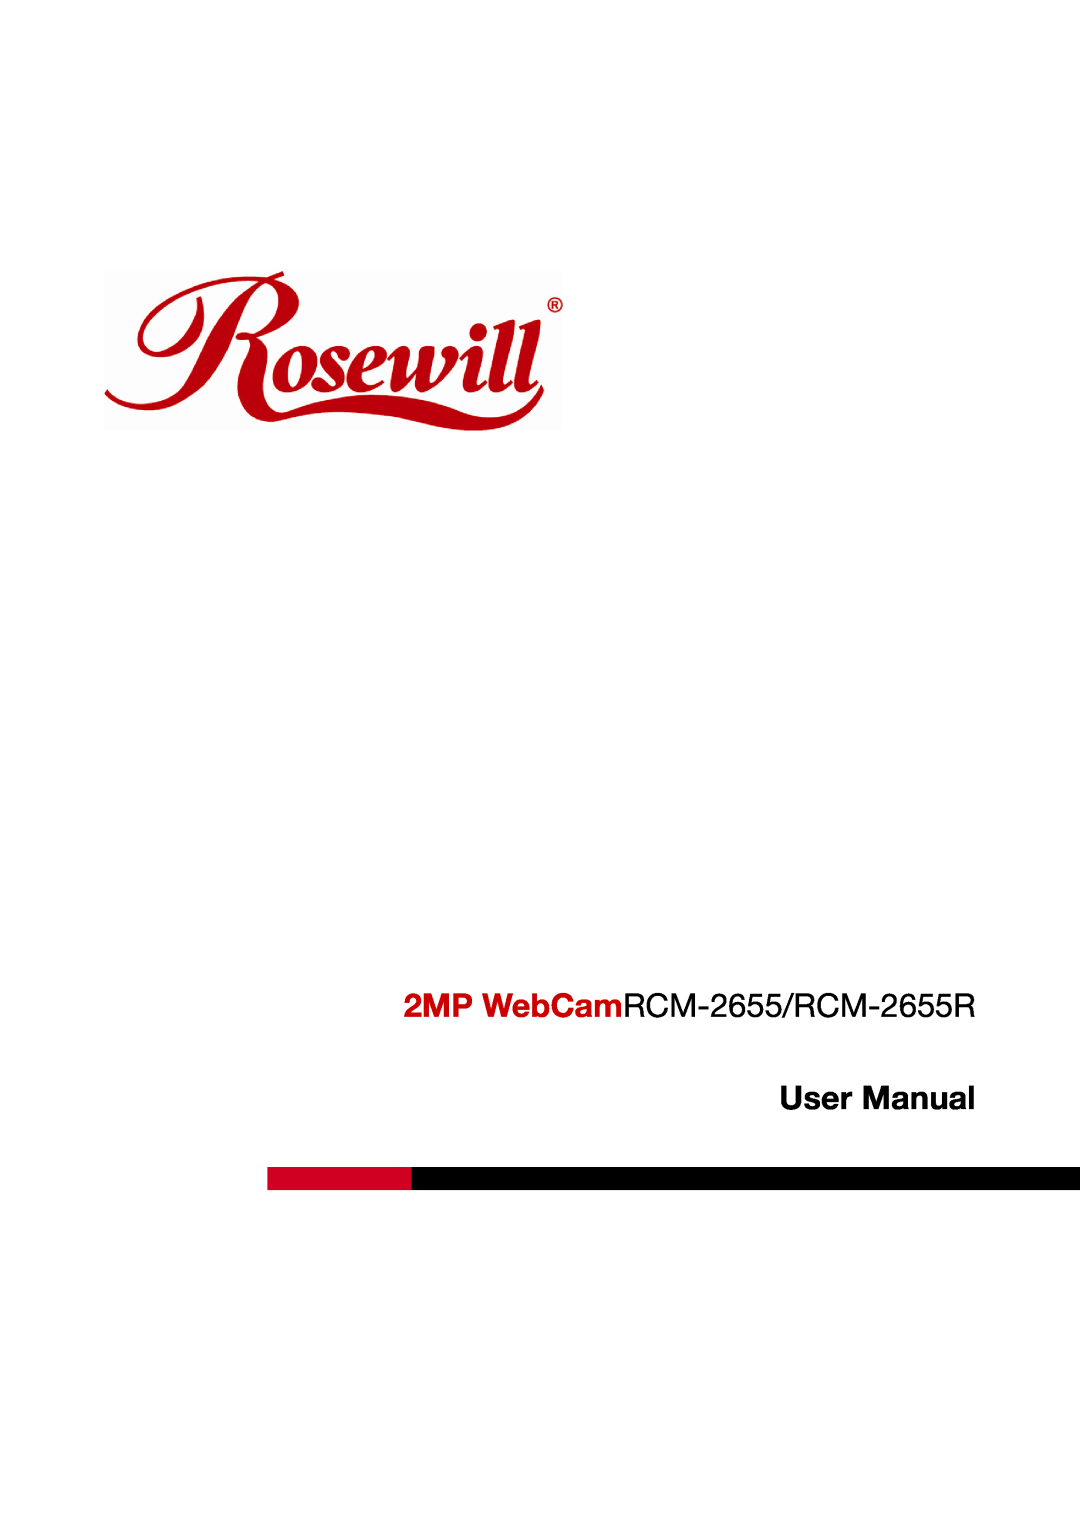 Rosewill user manual 2MP WebCamRCM-2655/RCM-2655R, User Manual 